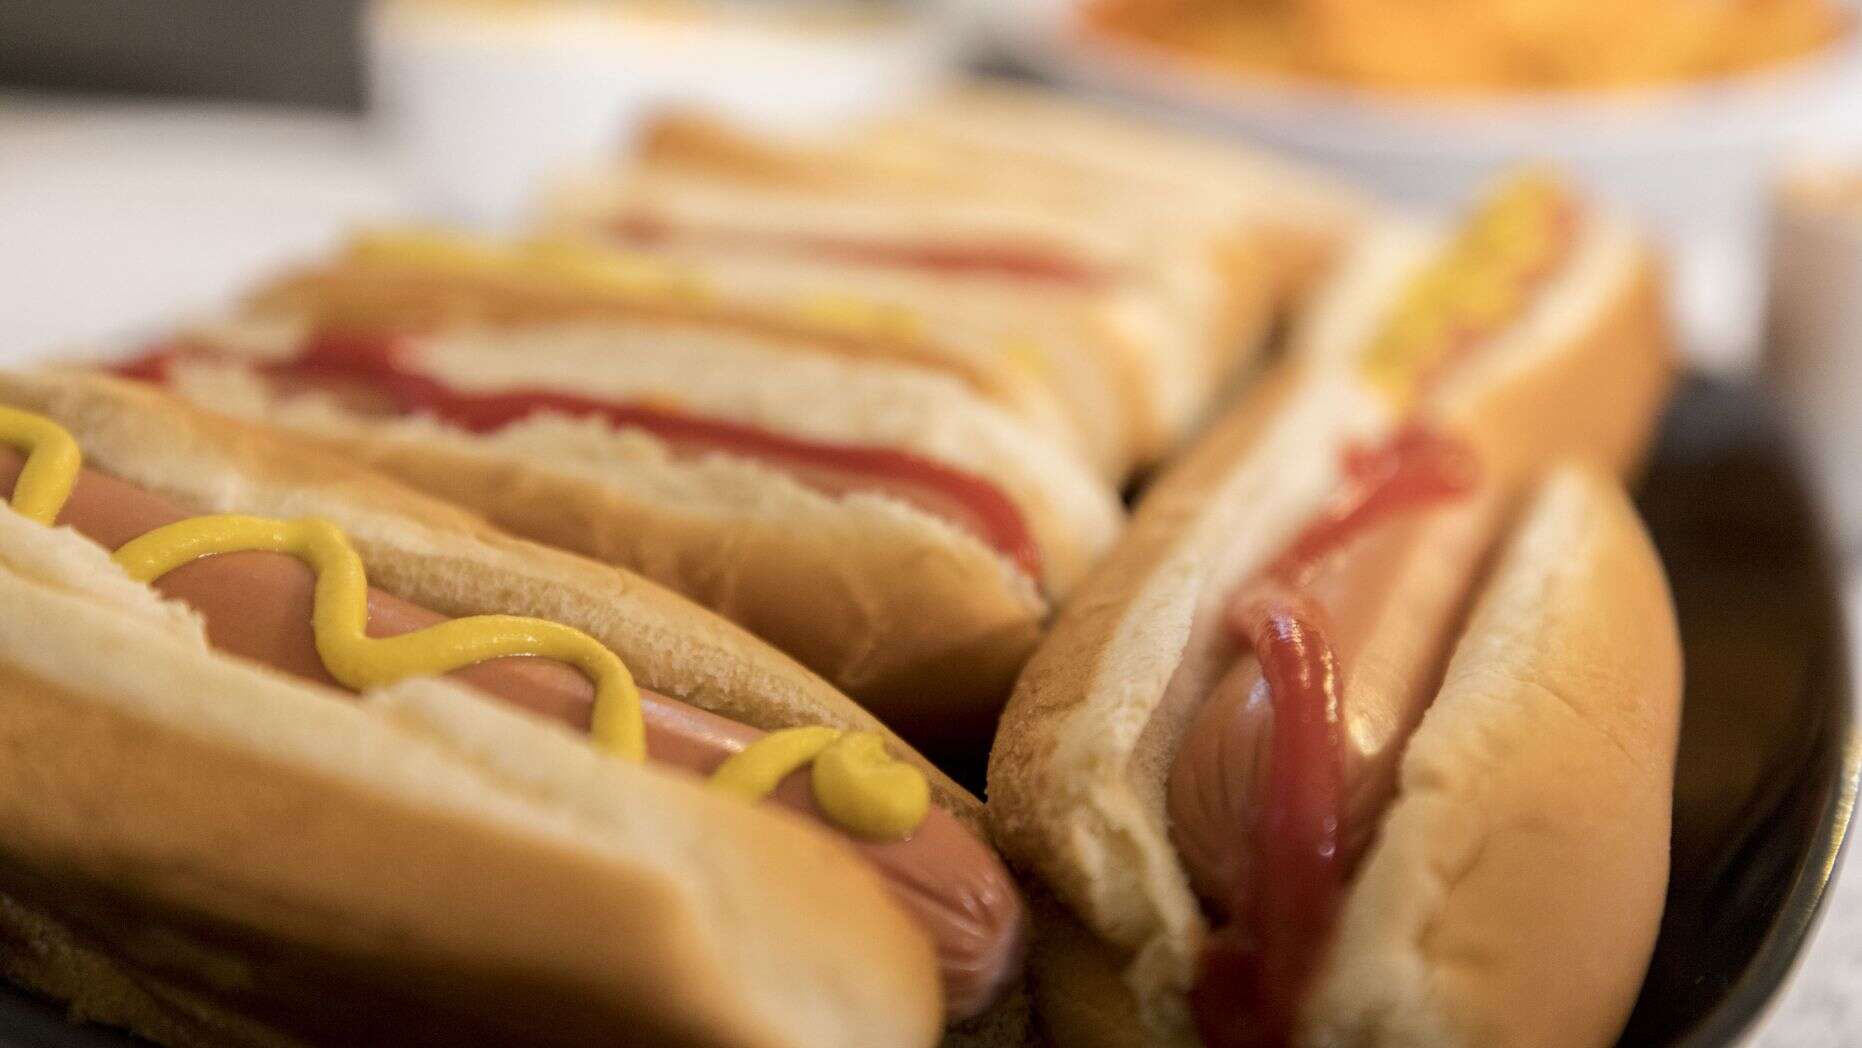 Hot Dog Plate FoxNews iStock